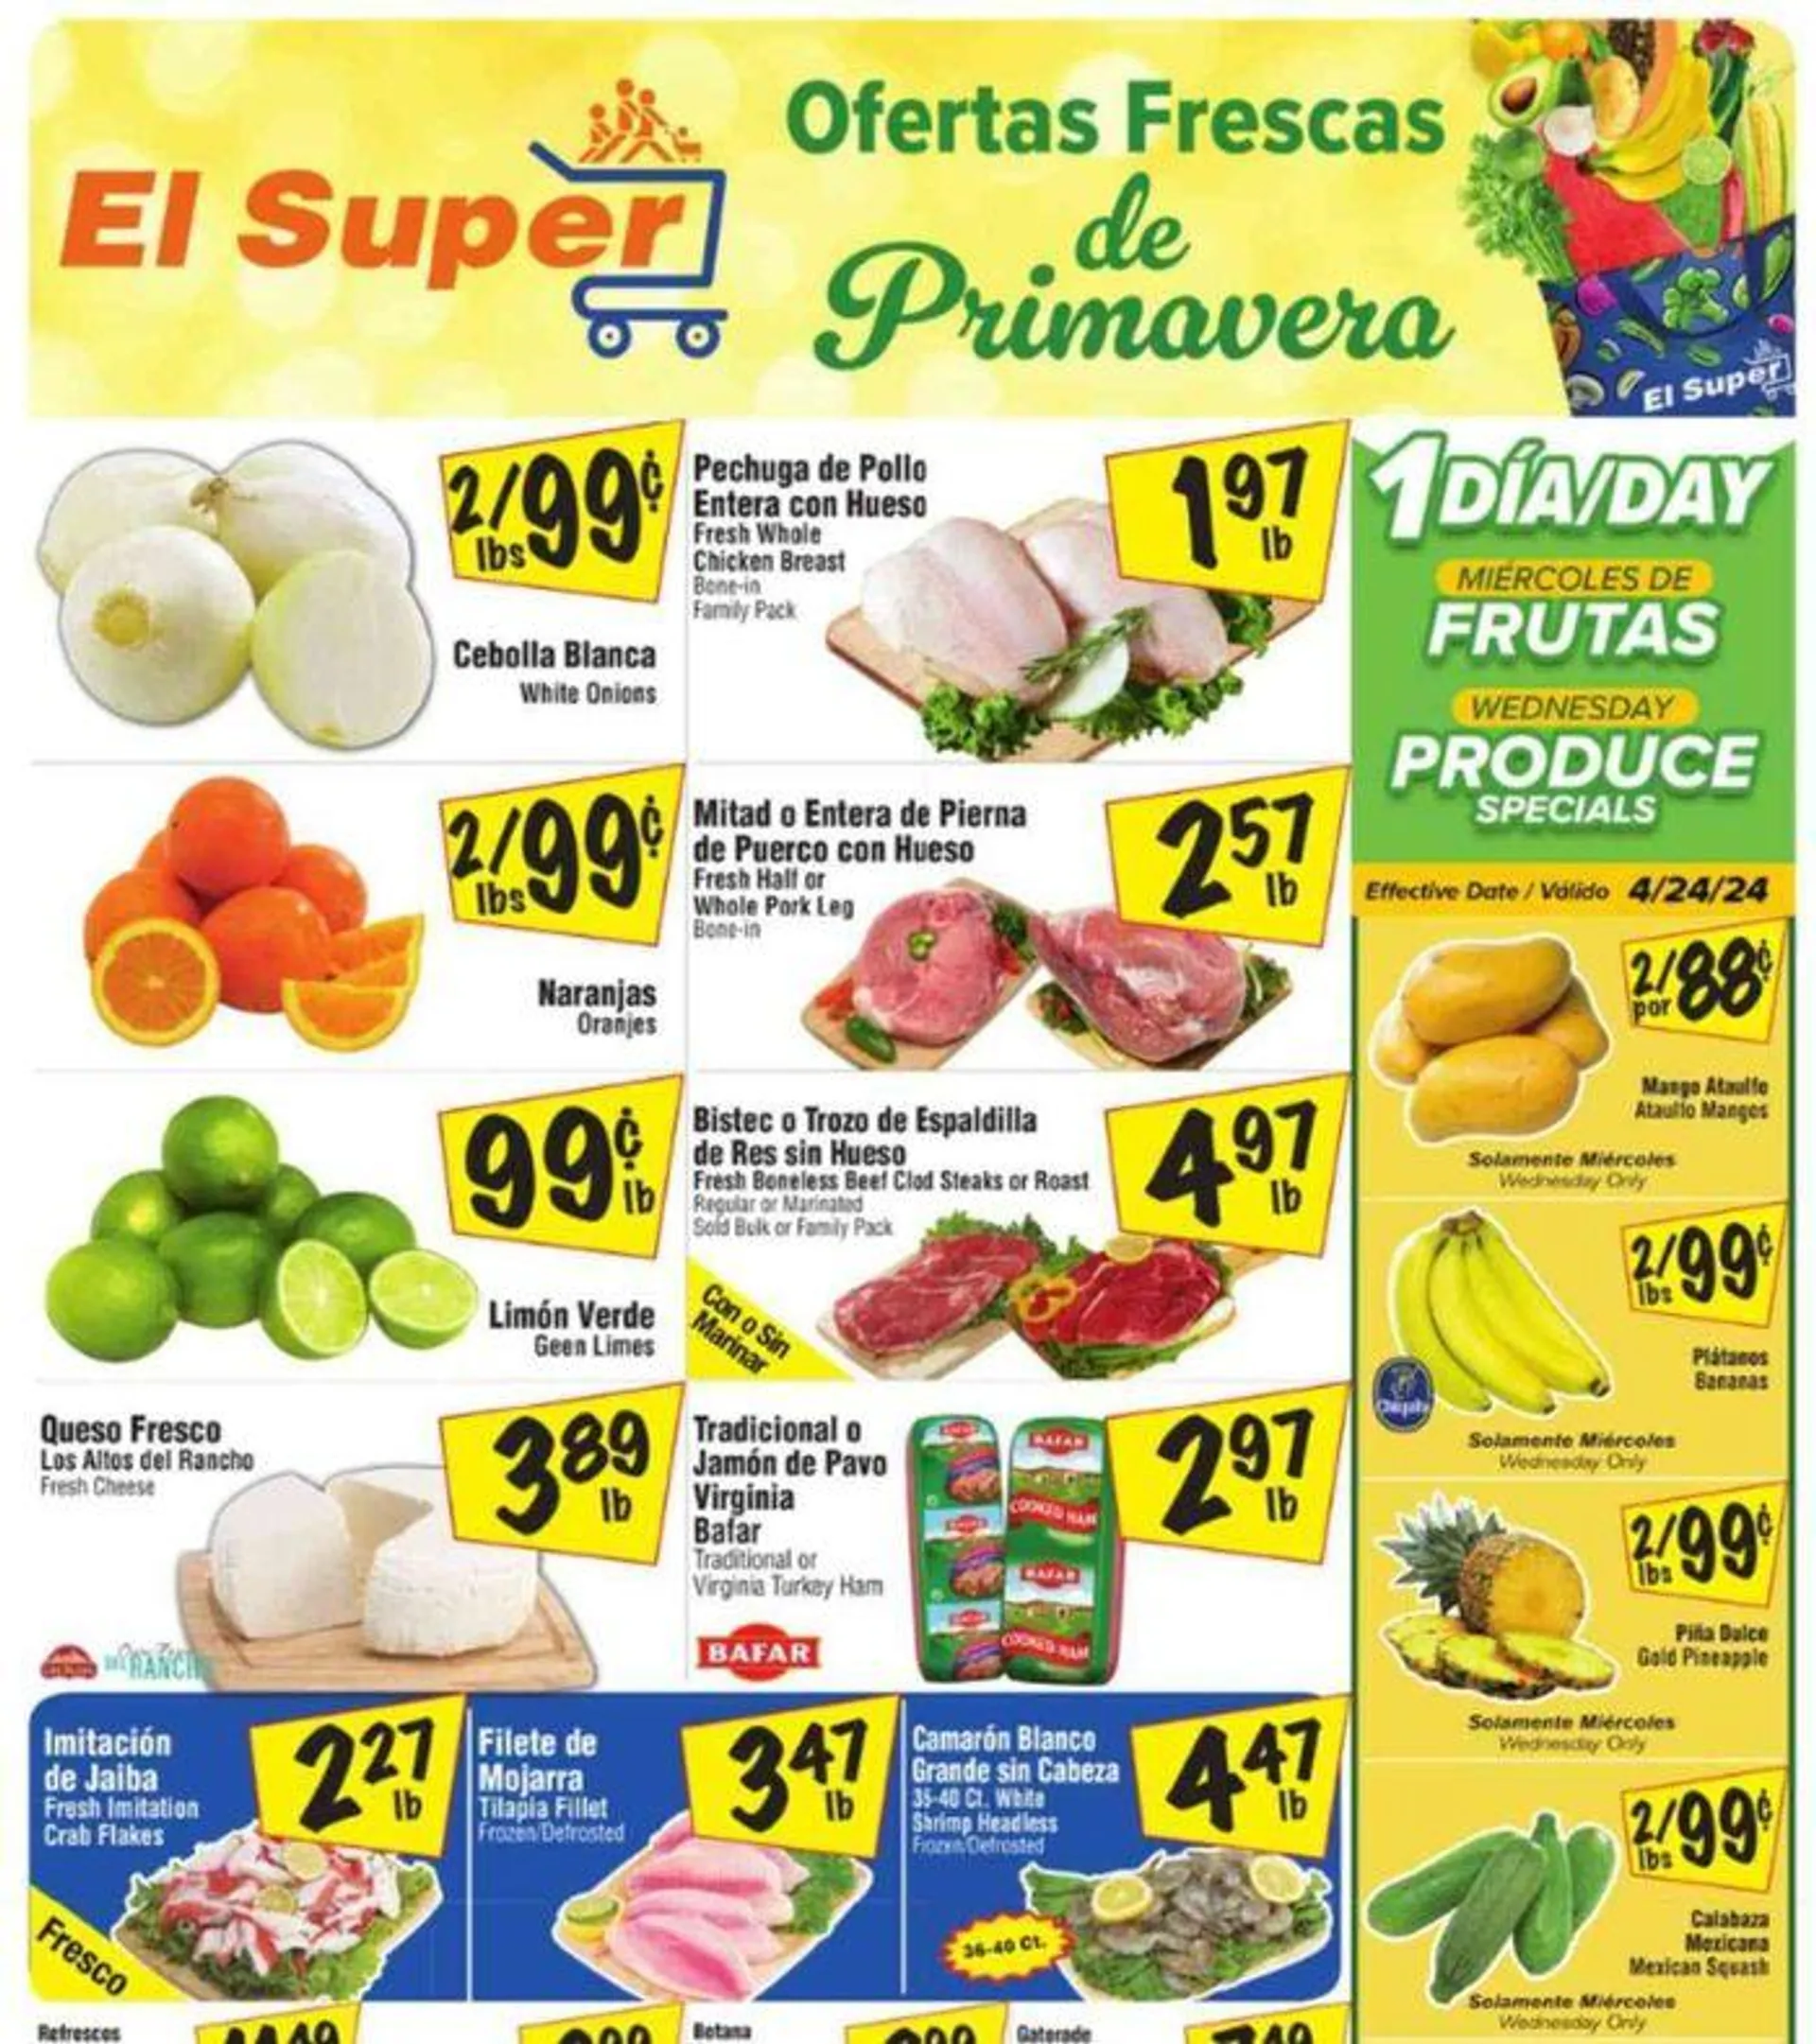 Weekly Ads El Super - 1